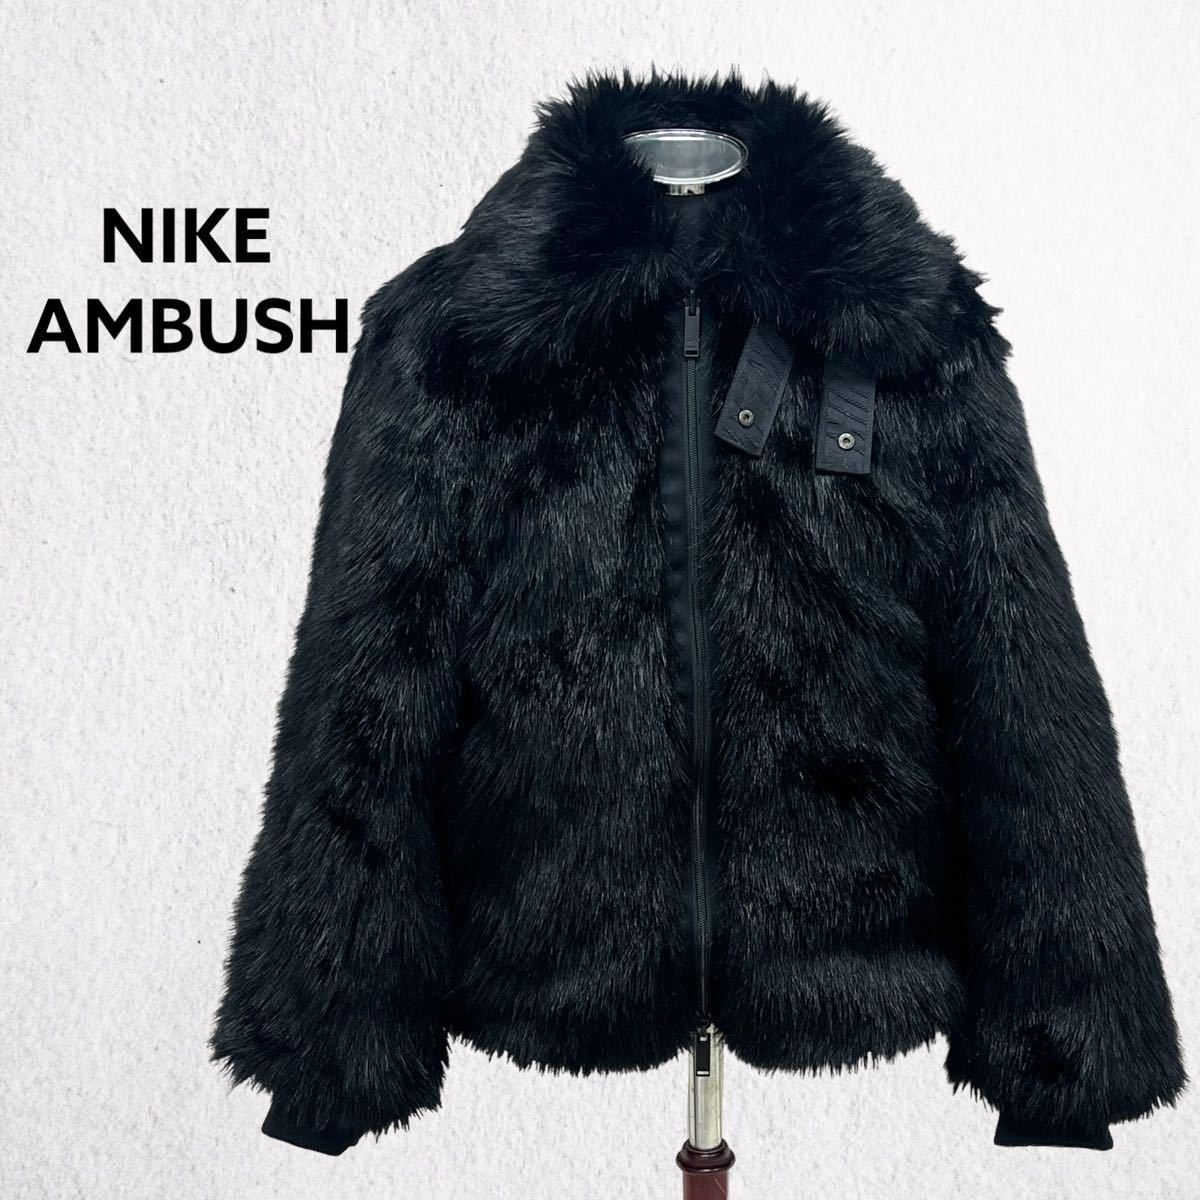 NIKE AMBUSH 18AW Reversible Faux Fur Coat ナイキ アンブッシュ リバーシブル フェイクファーコート